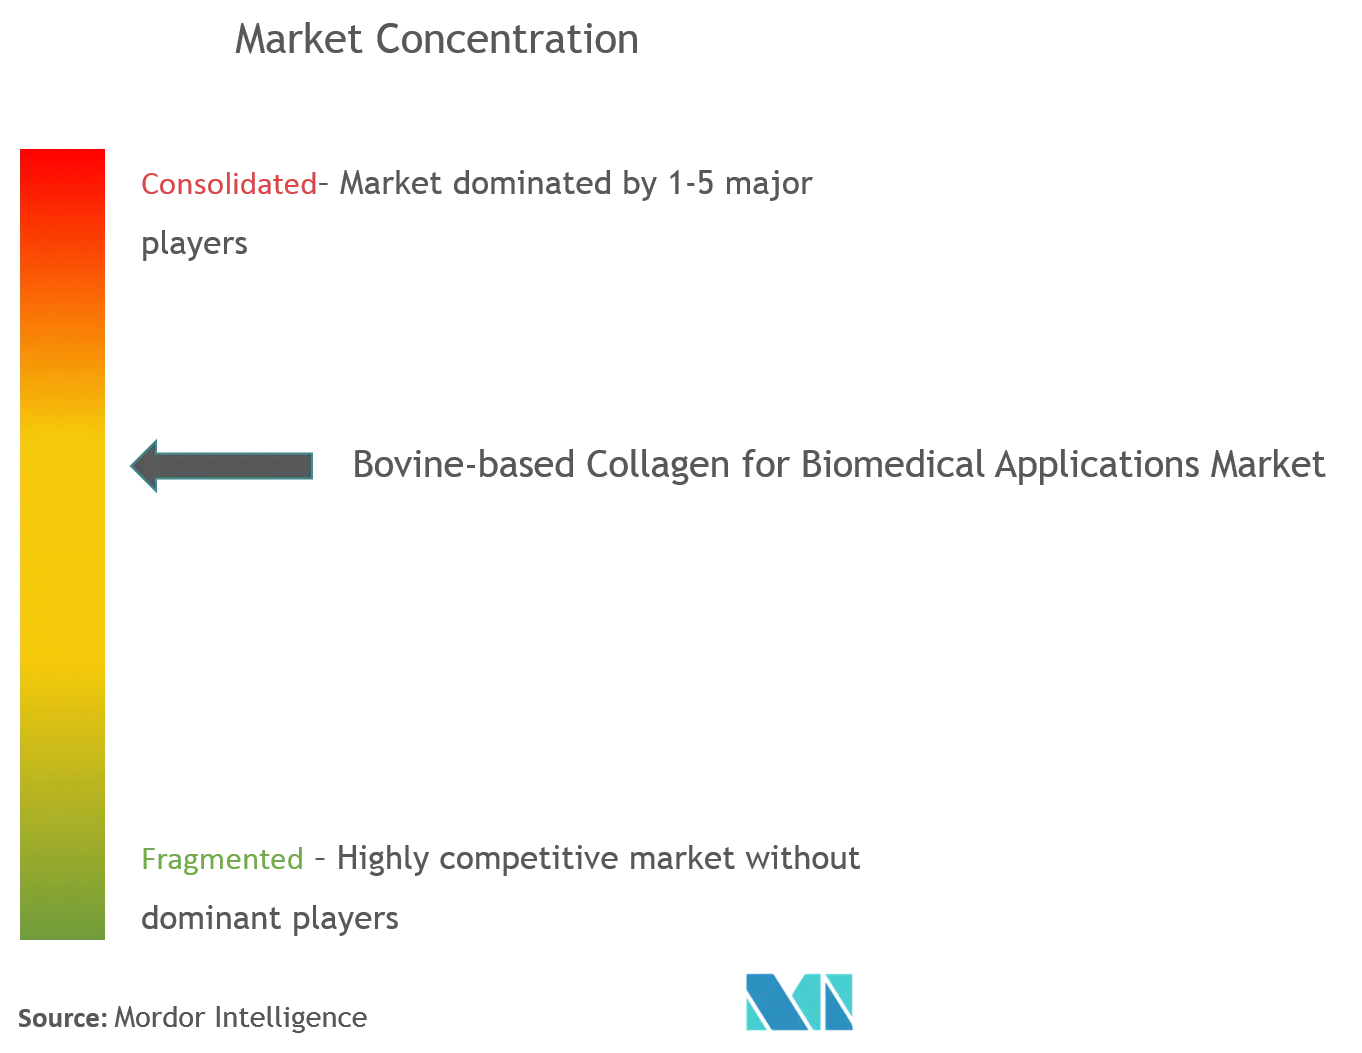 Bovine-based Collagen for Biomedical Applications Market